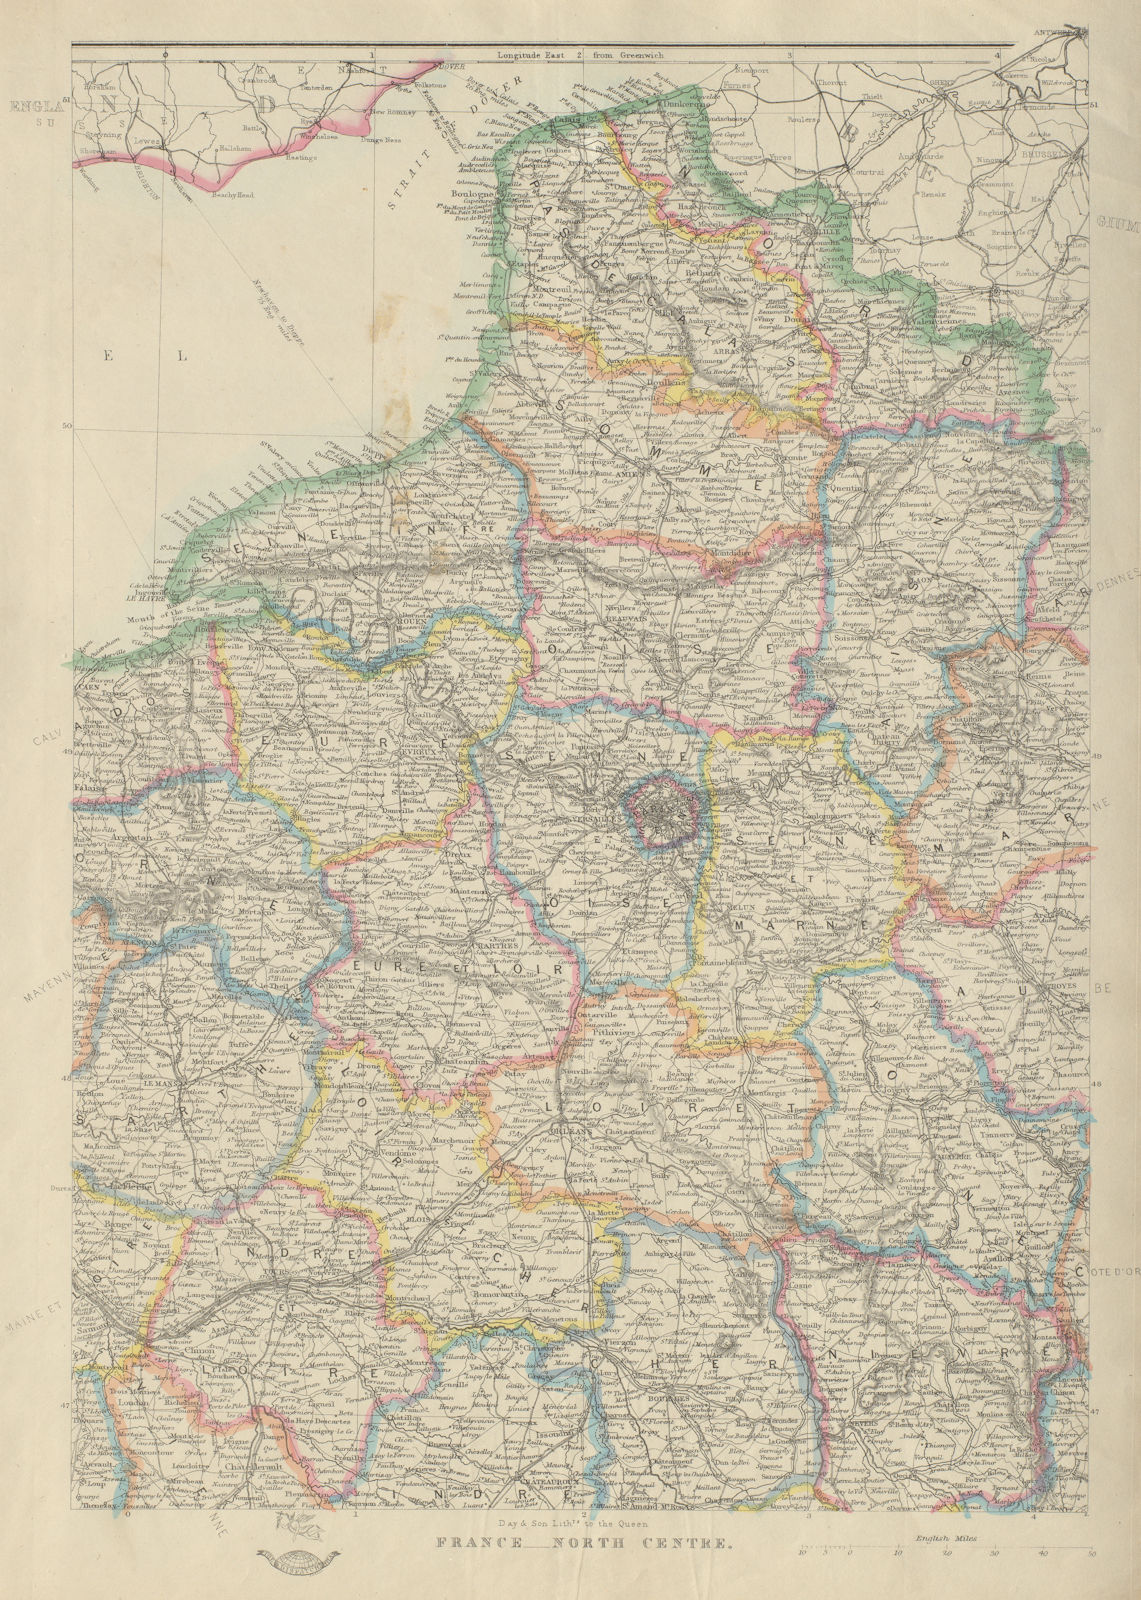 Associate Product FRANCE NORTH CENTRE. Picardy Normandy Ile de France Bourgogne.JW LOWRY 1862 map